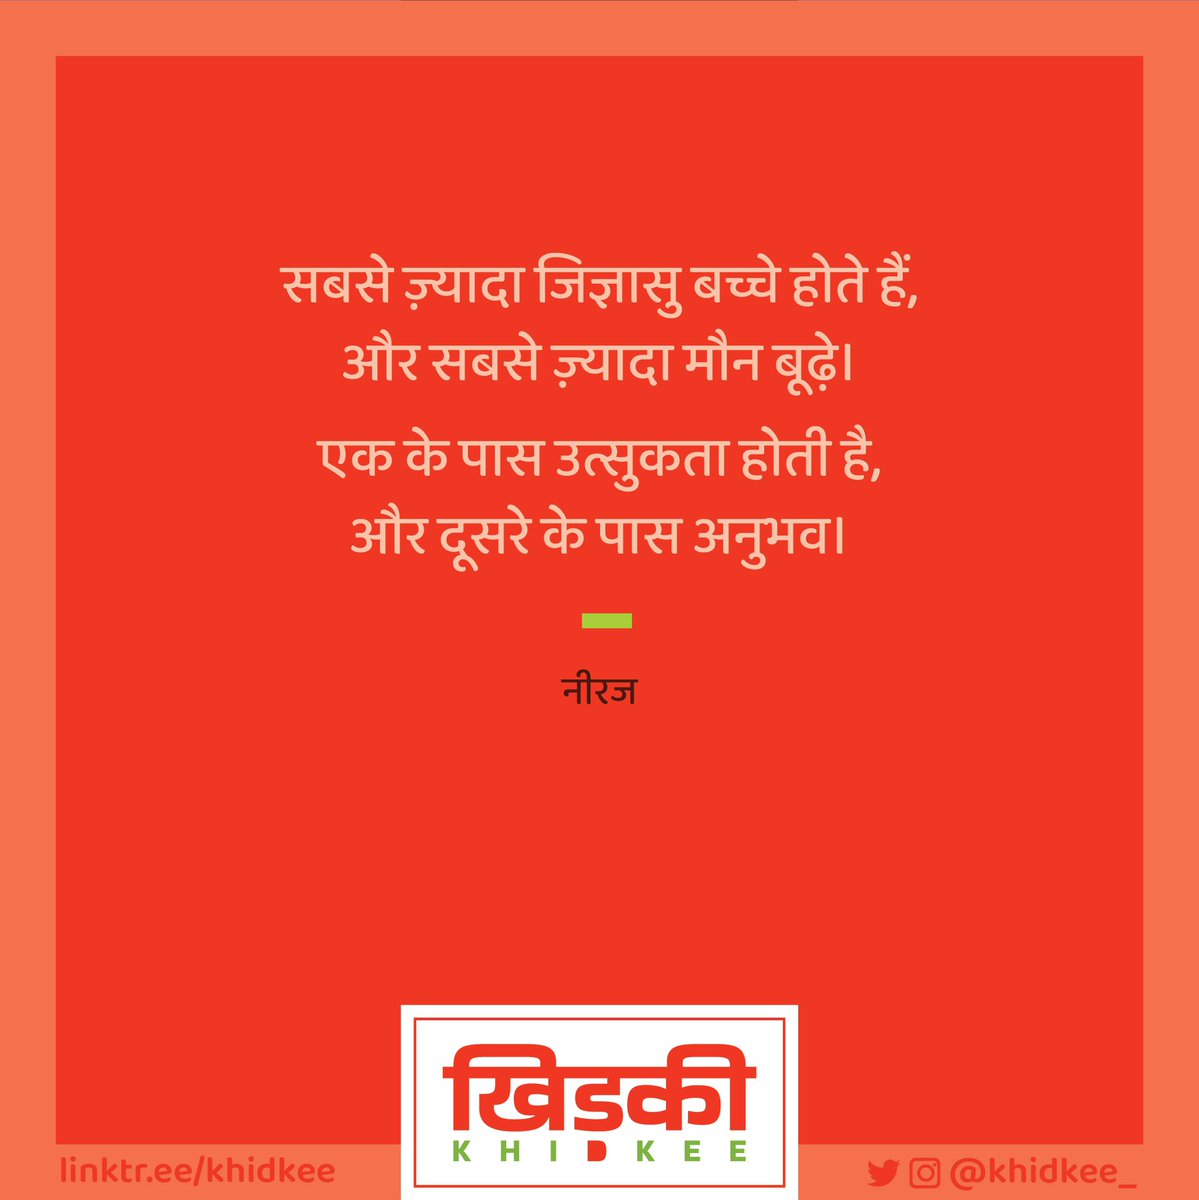 नीरज @Neeraj_Writes_ 
•••
:
FOLLOW @khidkee_
:
:
LIKE | SHARE | COMMENT
:
:
#khidkee_ #खिड़की_ #khidkee #खिड़की
:
#neerajwrites #zindagi #lovetalks #hindilove #poetrygram #thoughts #mohabbat #life #lifequotes #writersofinstagram #lovepoetry #hindipoems #hindishayari